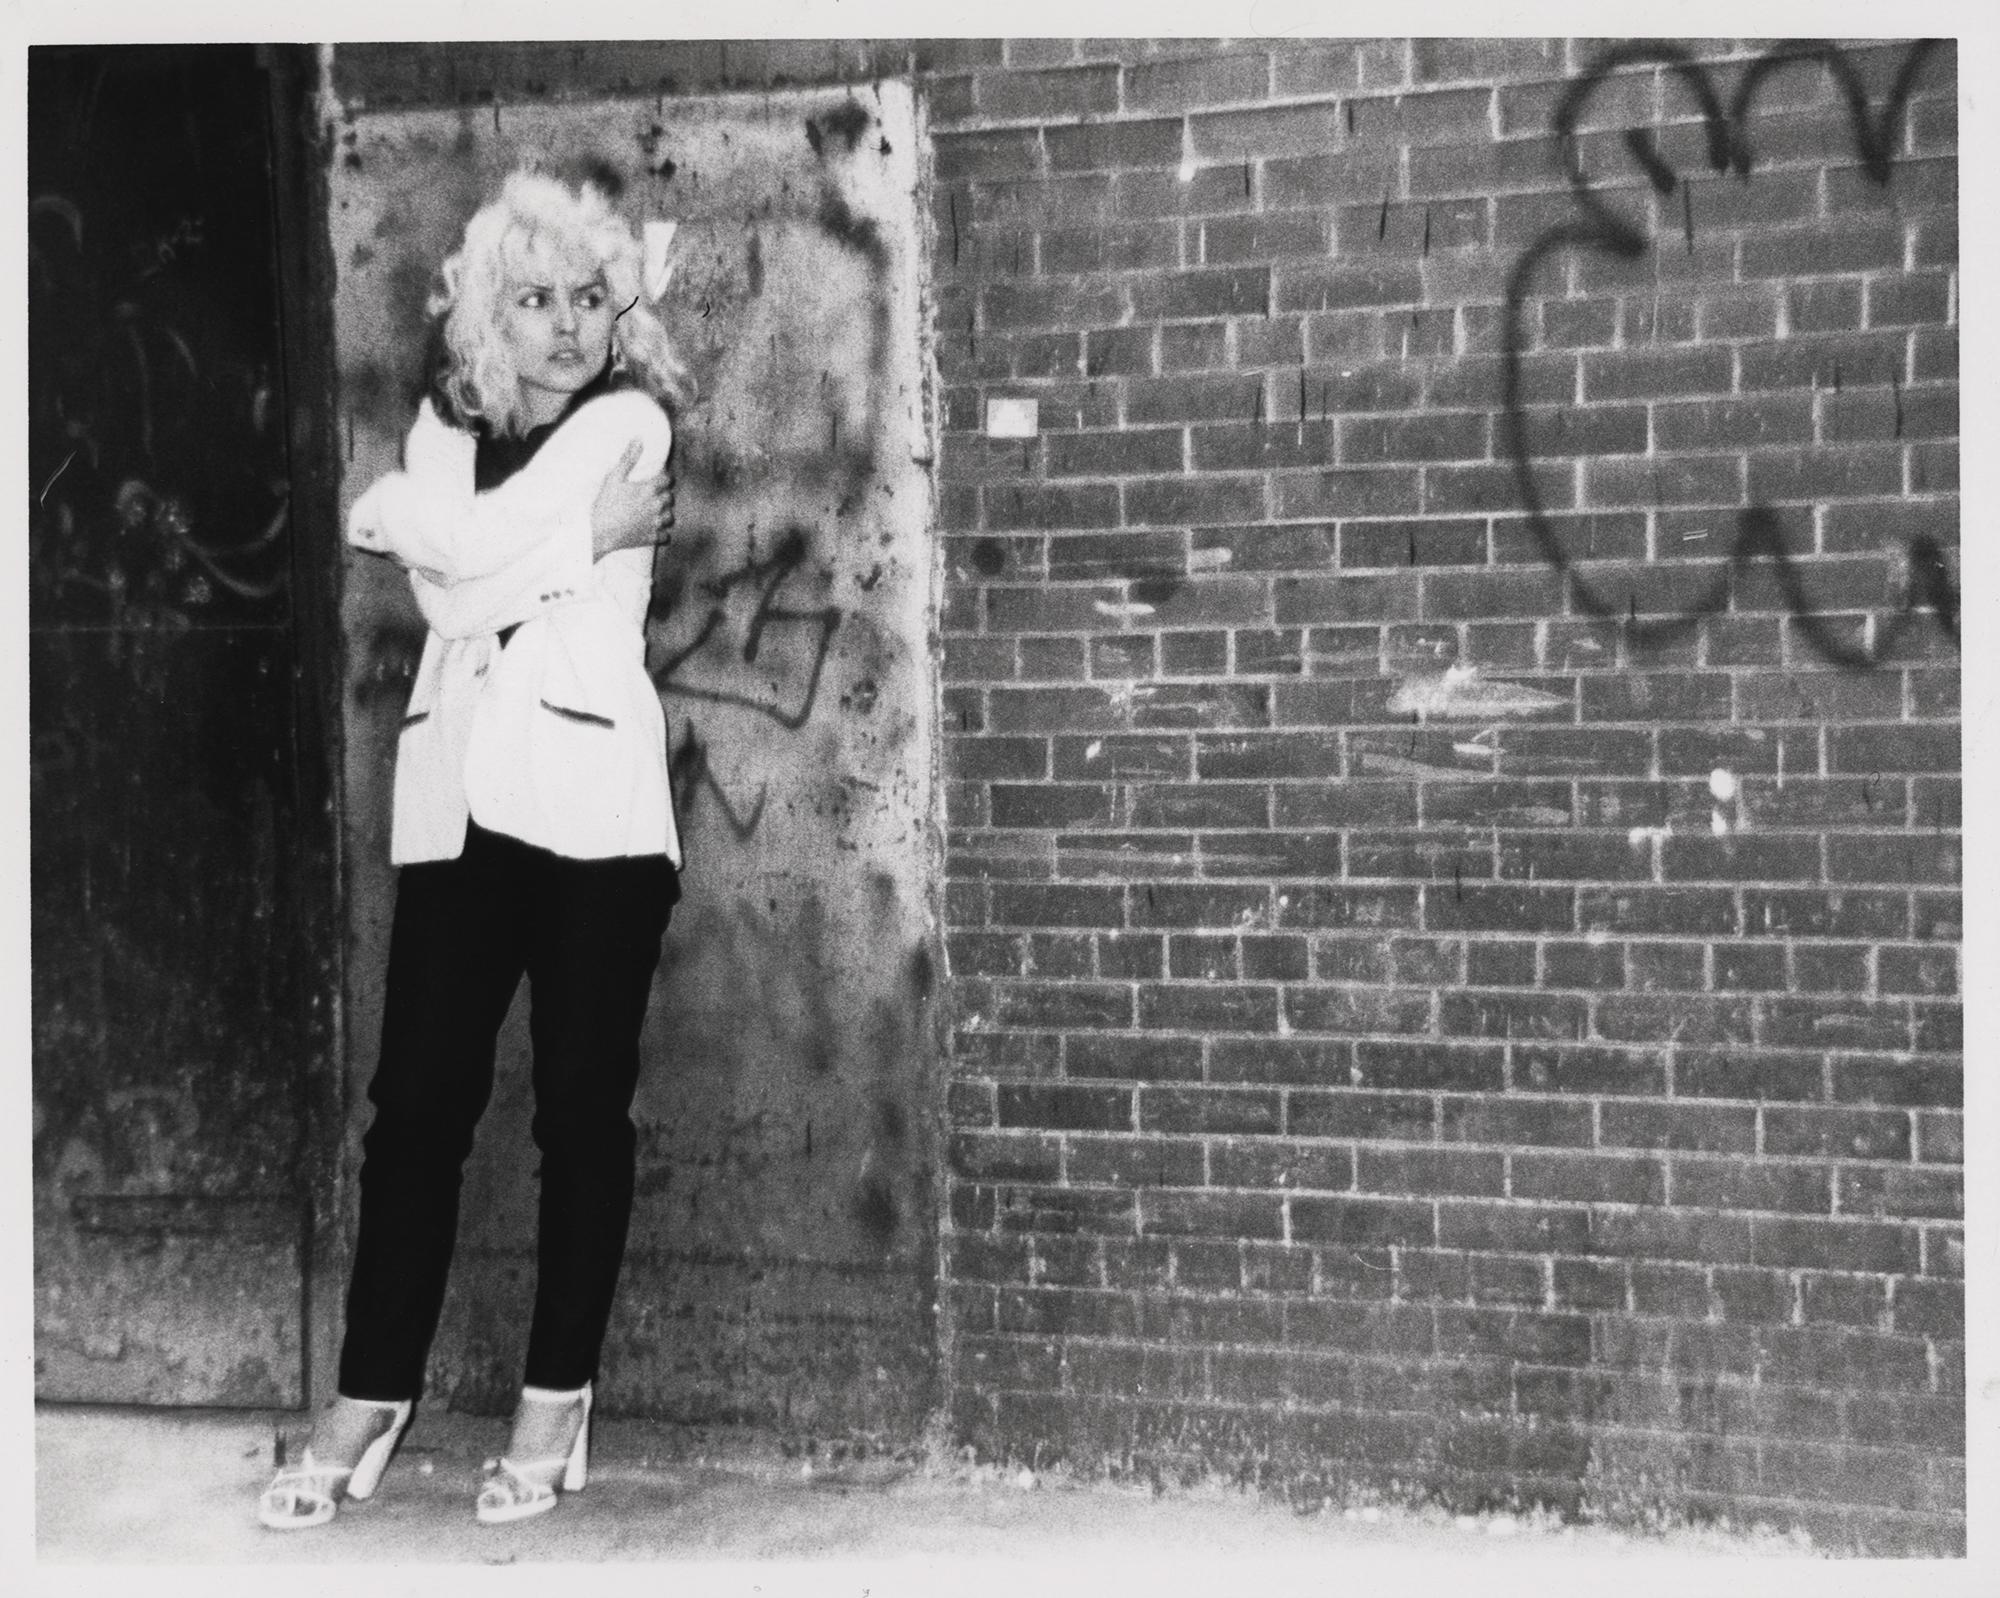 Fernando Natalici Portrait Photograph – Debbie Harry am Set des Foreigner East Village 1977 (Blondie-Fotografie) 